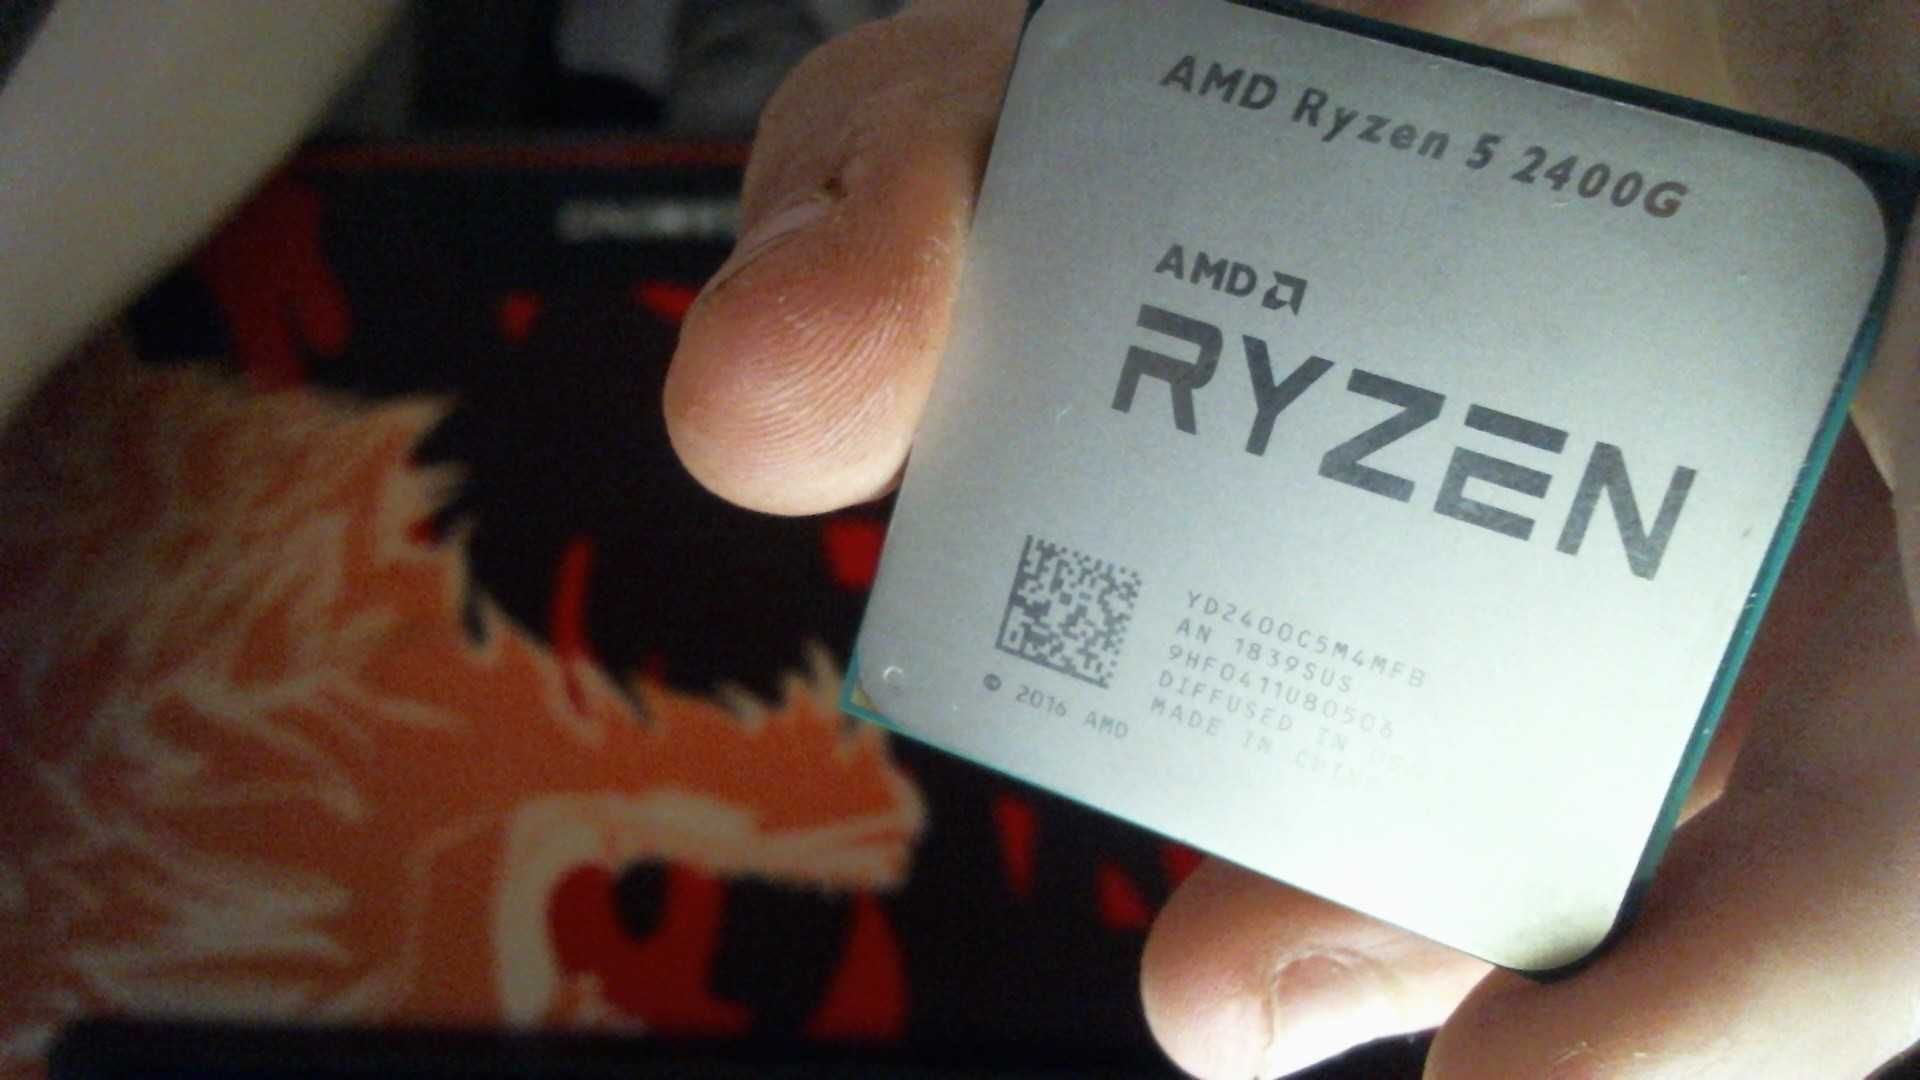 Procesor AMD Ryzen 5 2400G ( nu rasp la apeluri doar la msj)